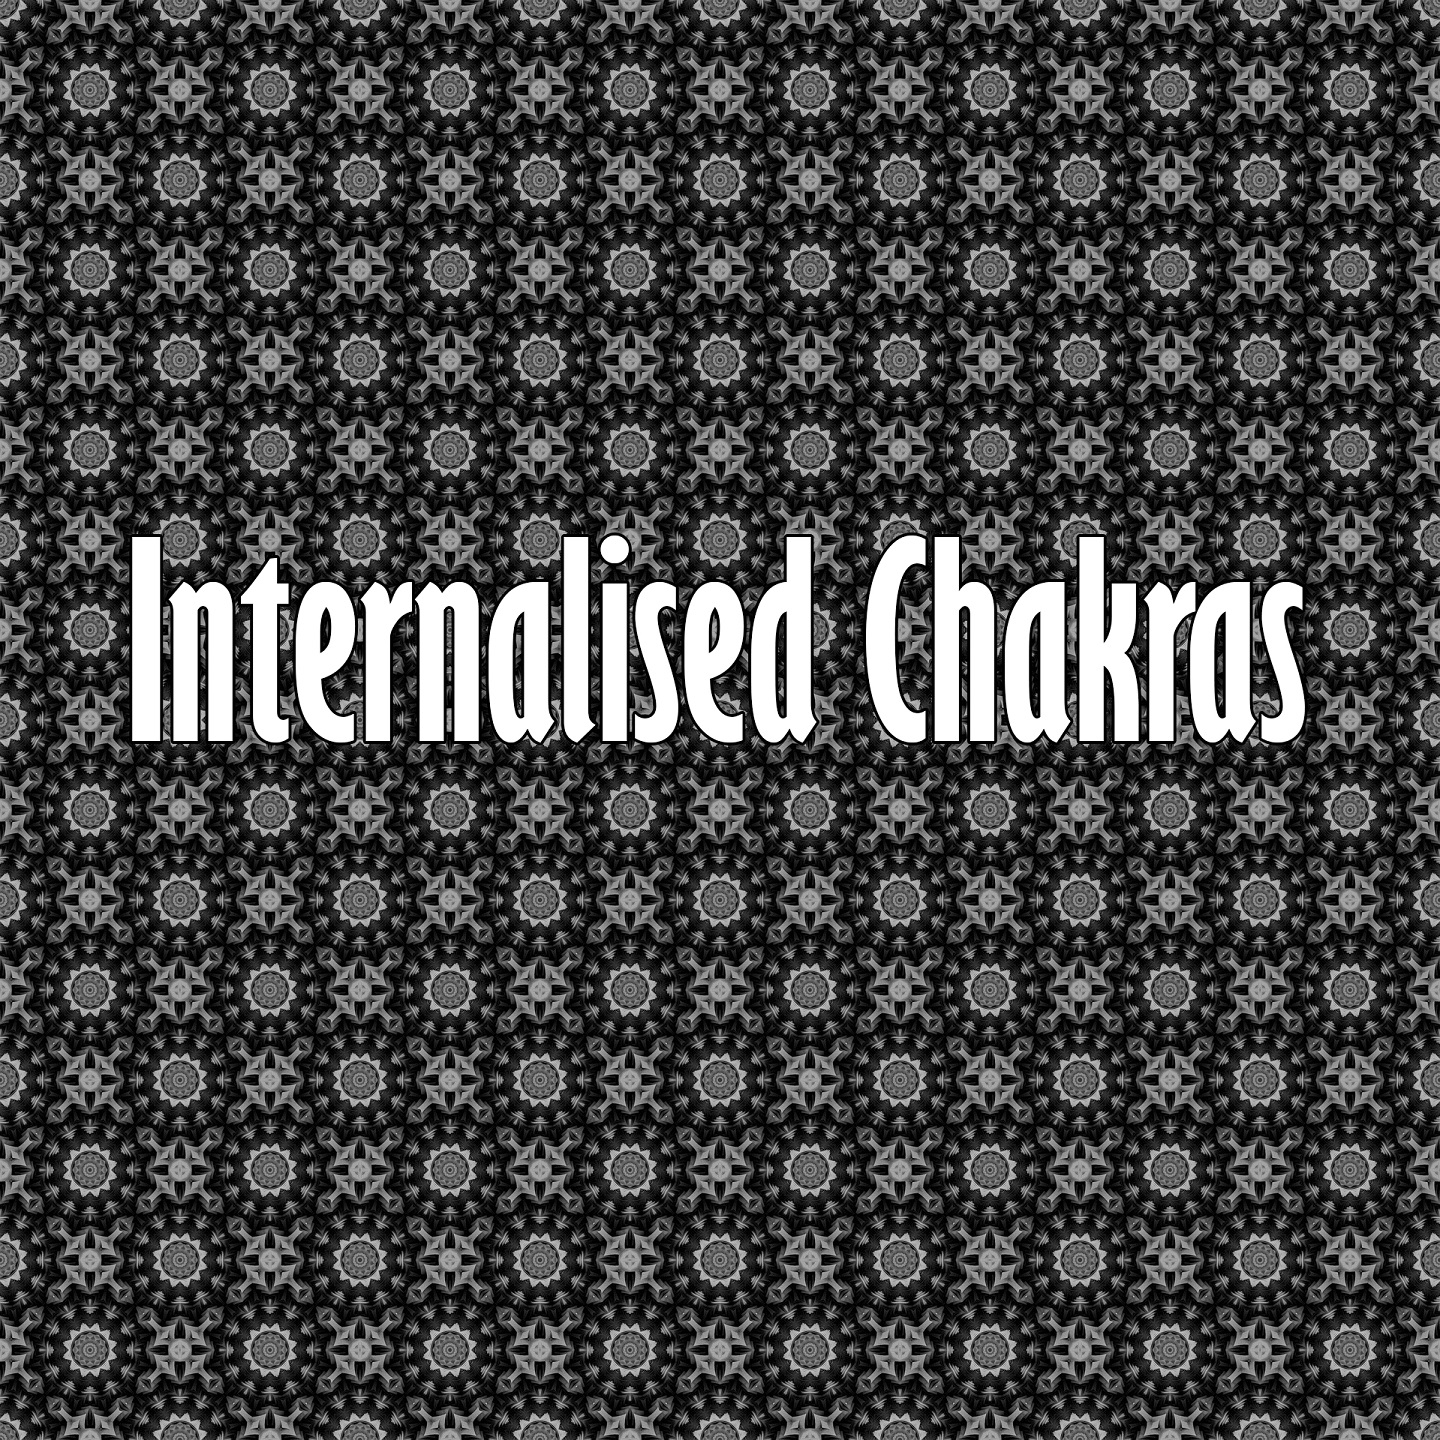 Internalised Chakras